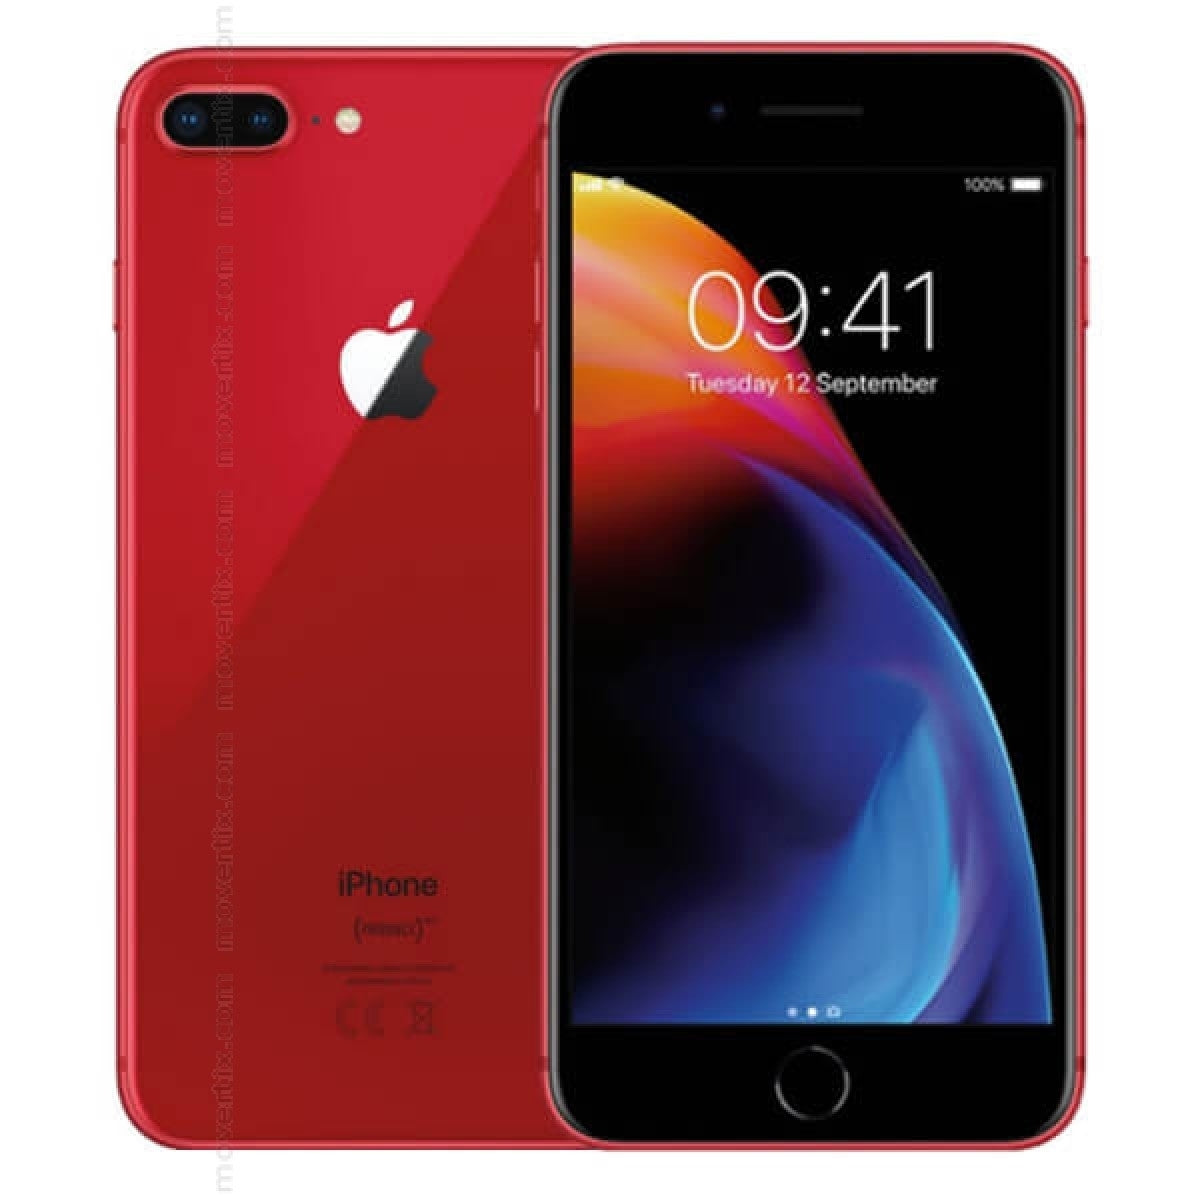 Apple iPhone 8 Plus 64GB 4.7" 4G LTE GSM Unlocked, Red (Refurbished